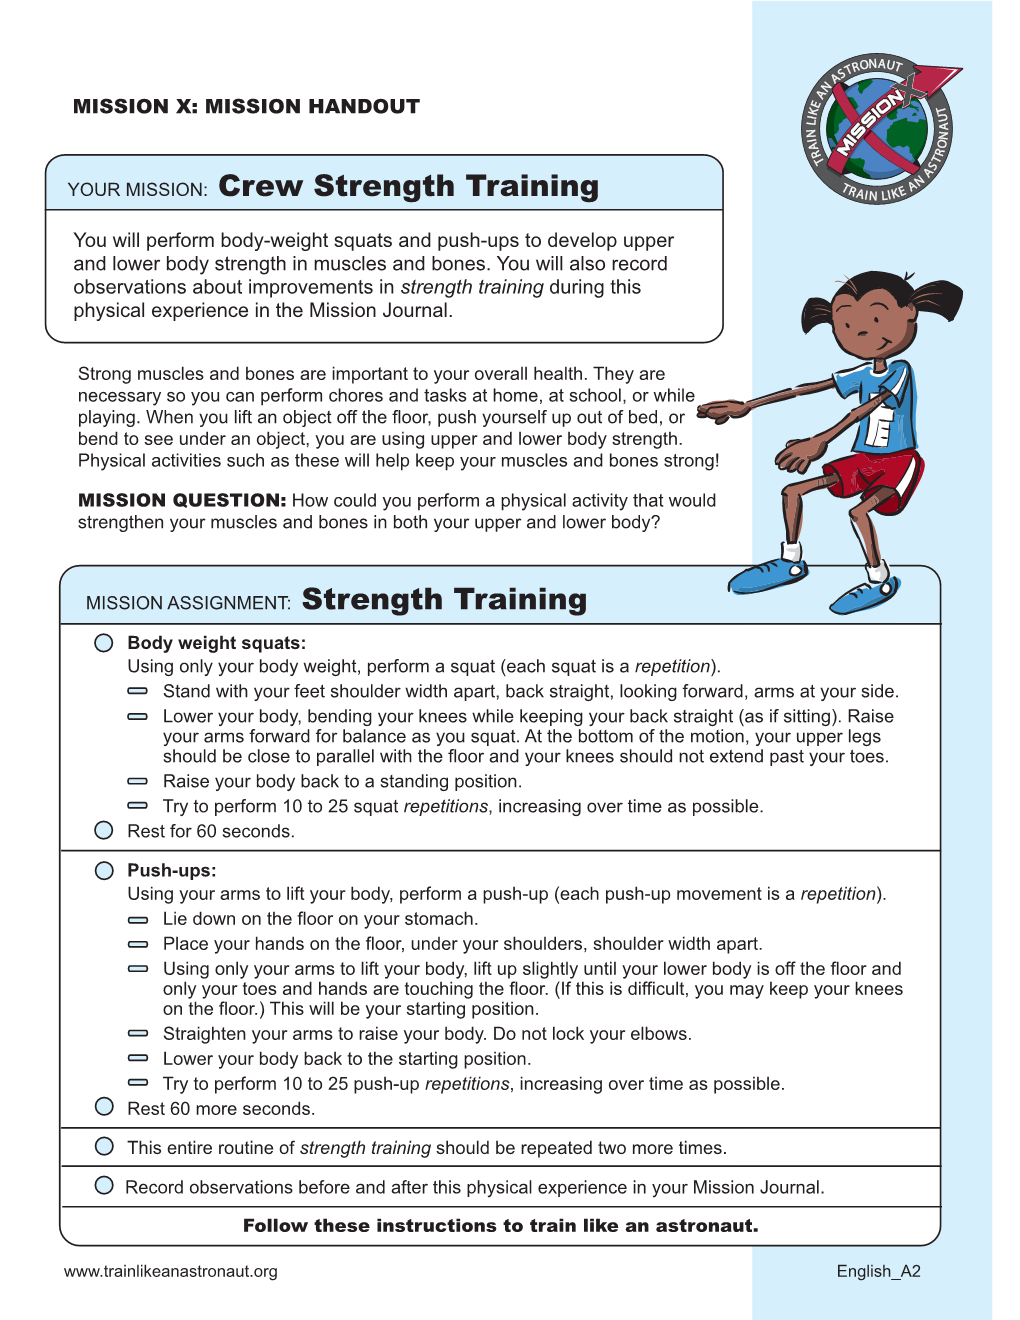 Crew Strength Training